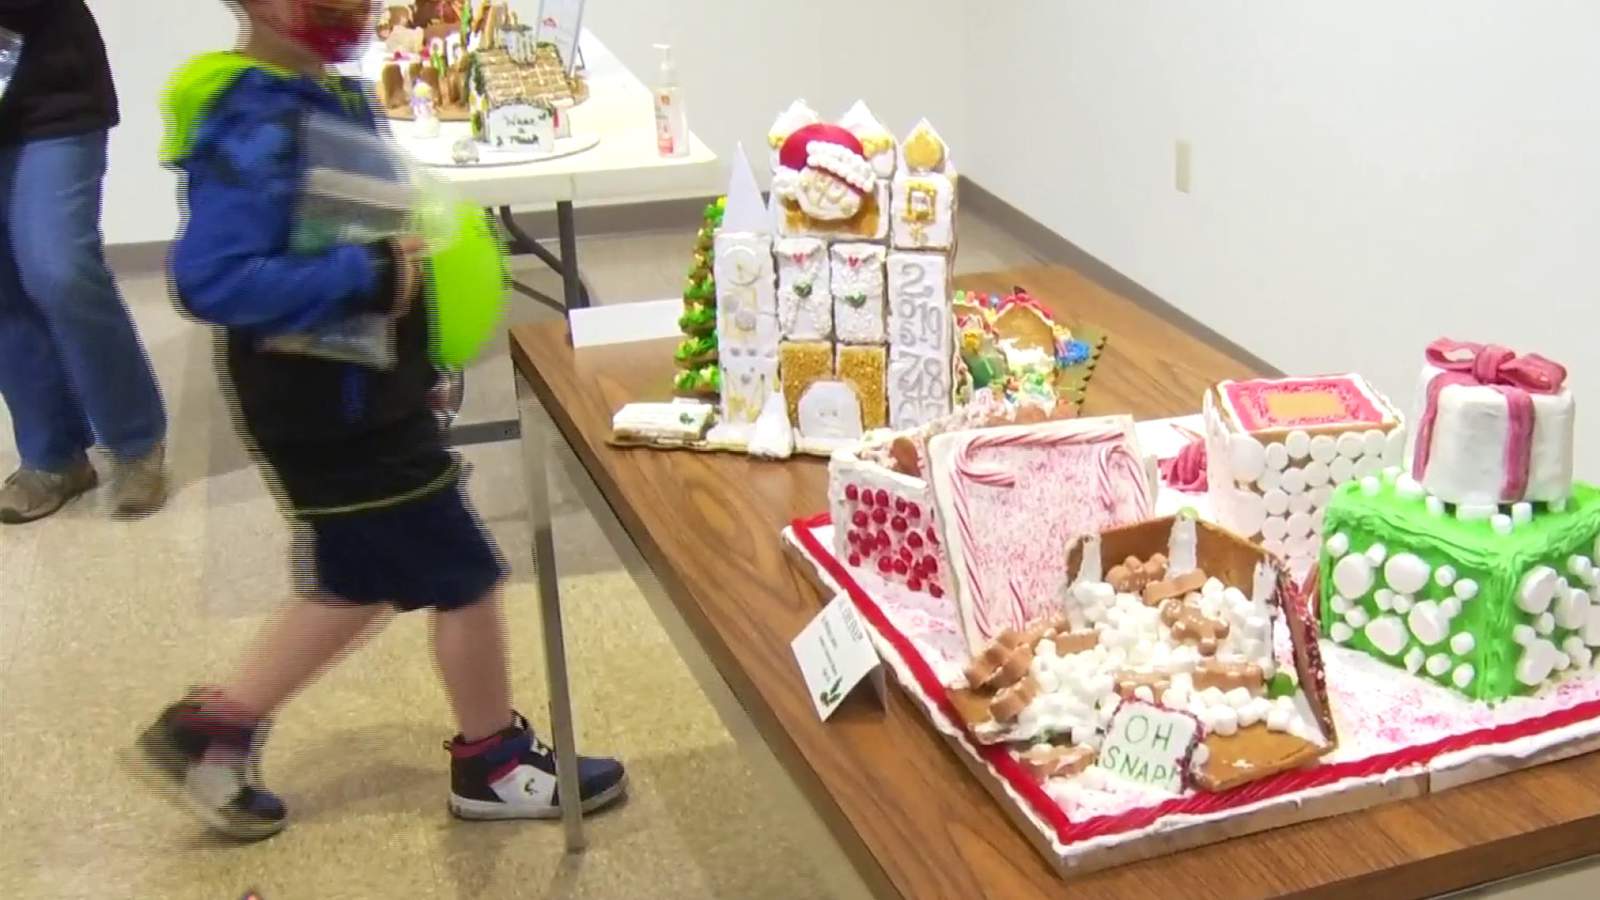 Salem Gingerbread Festival spread Christmas cheer despite social distancing rules